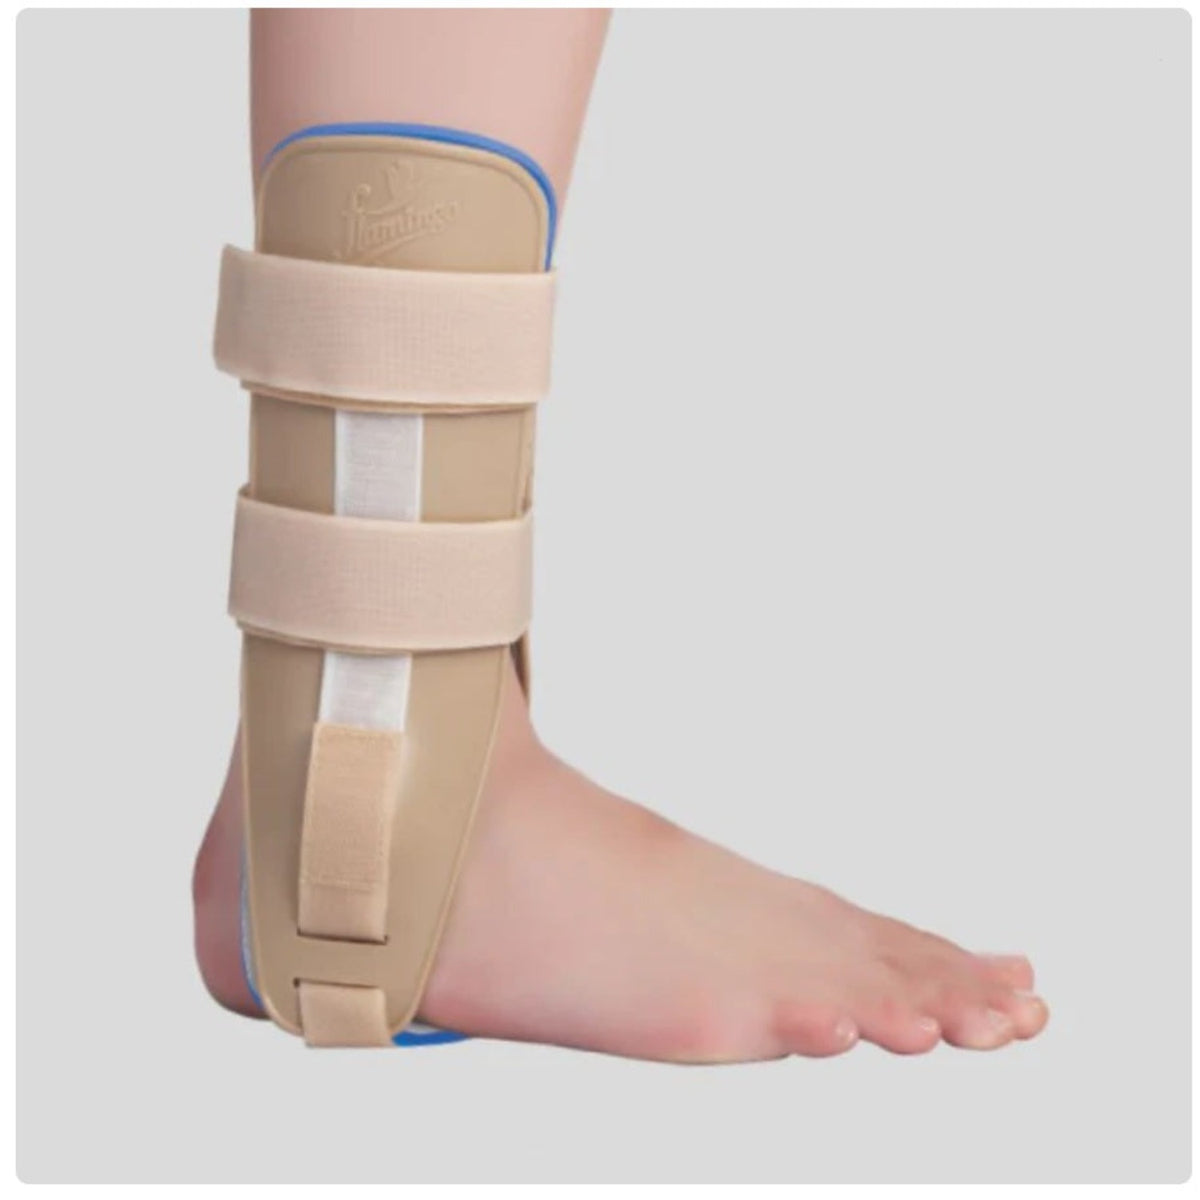 Flamingo Health Orthopaedic Gel Stirrup Ankle Brace Universal Code 2194